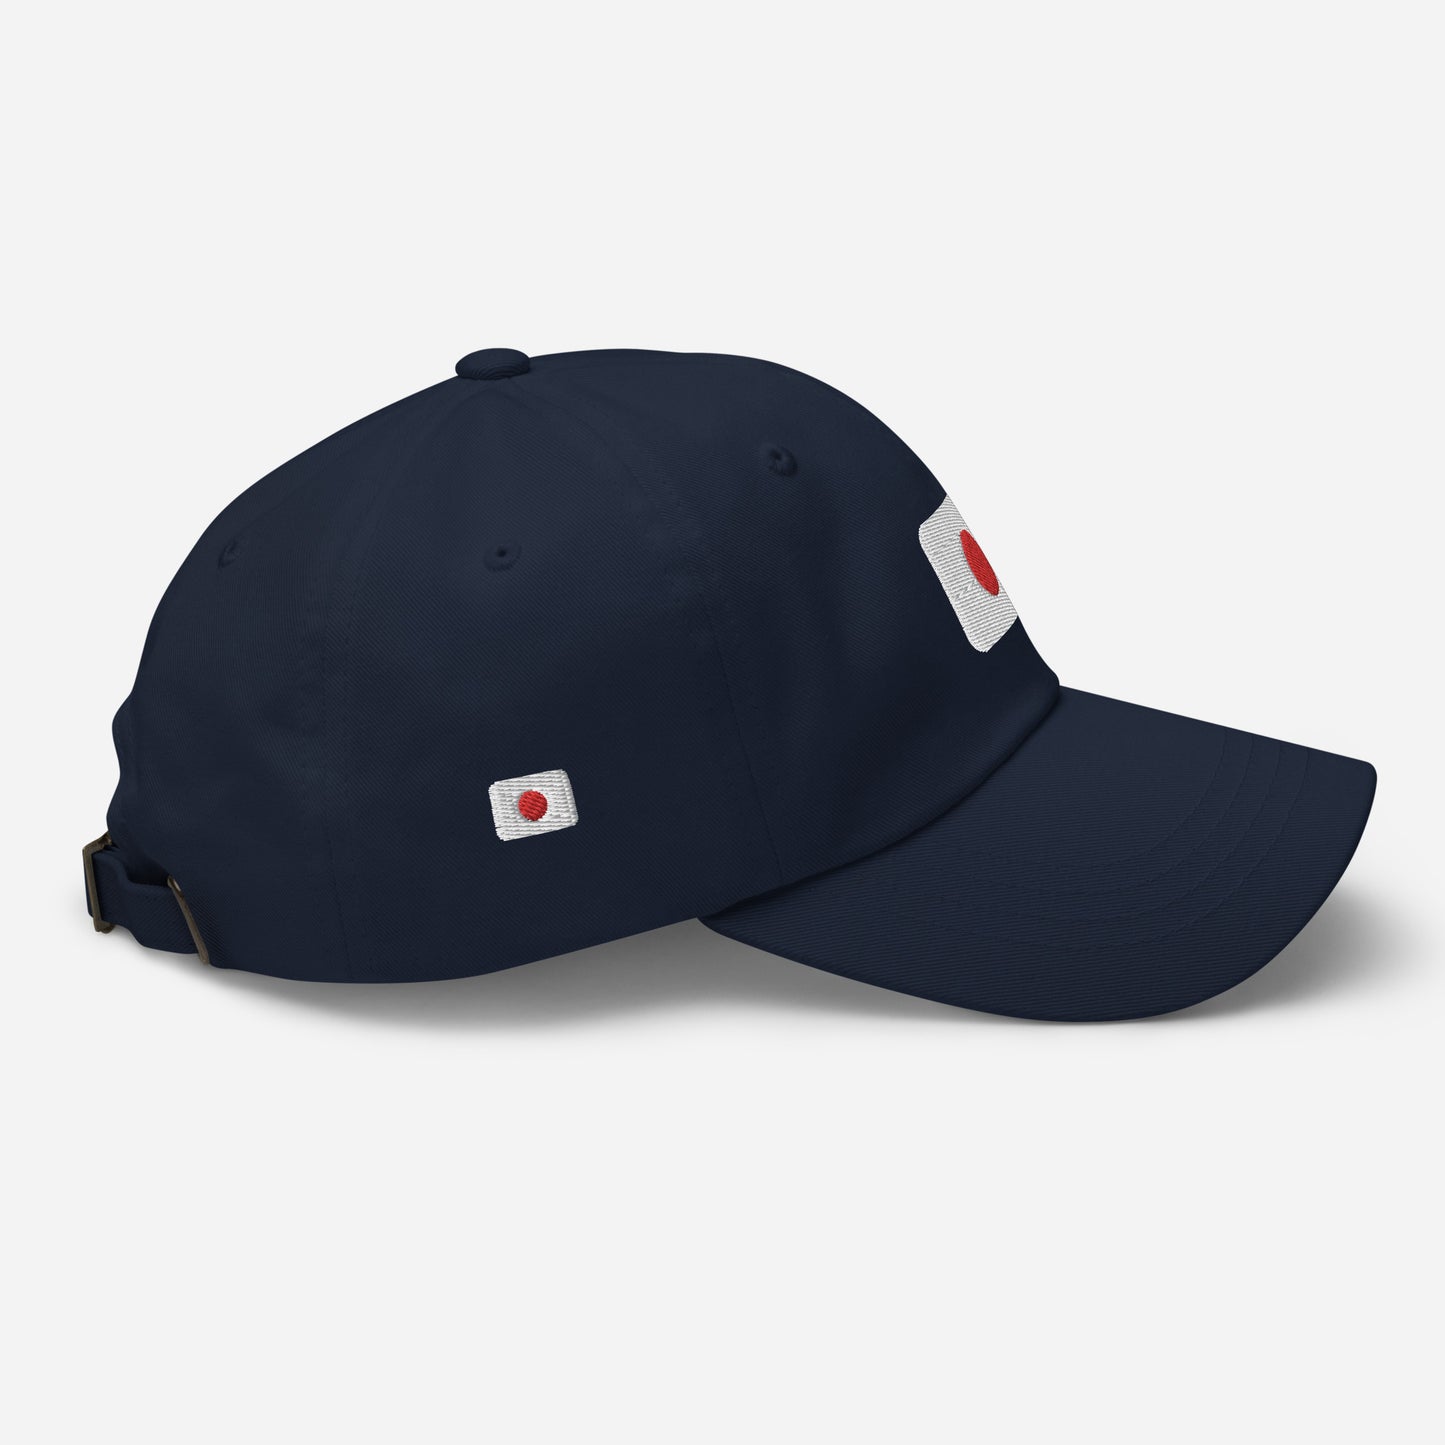 Japan baseball hat